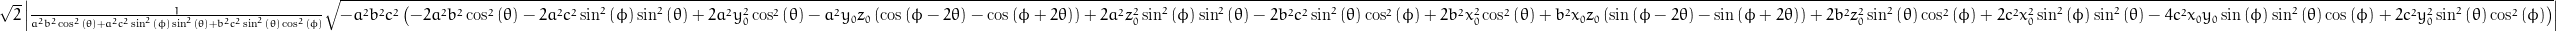 \sqrt{2} \left\lvert{\frac{1}{a^{2} b^{2} \cos^{2}{\left (\theta \right )} + a^{2} c^{2} \sin^{2}{\left (\phi \right )} \sin^{2}{\left (\theta \right )} + b^{2} c^{2} \sin^{2}{\left (\theta \right )} \cos^{2}{\left (\phi \right )}} \sqrt{- a^{2} b^{2} c^{2} \left(- 2 a^{2} b^{2} \cos^{2}{\left (\theta \right )} - 2 a^{2} c^{2} \sin^{2}{\left (\phi \right )} \sin^{2}{\left (\theta \right )} + 2 a^{2} y_{0}^{2} \cos^{2}{\left (\theta \right )} - a^{2} y_{0} z_{0} \left(\cos{\left (\phi - 2 \theta \right )} - \cos{\left (\phi + 2 \theta \right )}\right) + 2 a^{2} z_{0}^{2} \sin^{2}{\left (\phi \right )} \sin^{2}{\left (\theta \right )} - 2 b^{2} c^{2} \sin^{2}{\left (\theta \right )} \cos^{2}{\left (\phi \right )} + 2 b^{2} x_{0}^{2} \cos^{2}{\left (\theta \right )} + b^{2} x_{0} z_{0} \left(\sin{\left (\phi - 2 \theta \right )} - \sin{\left (\phi + 2 \theta \right )}\right) + 2 b^{2} z_{0}^{2} \sin^{2}{\left (\theta \right )} \cos^{2}{\left (\phi \right )} + 2 c^{2} x_{0}^{2} \sin^{2}{\left (\phi \right )} \sin^{2}{\left (\theta \right )} - 4 c^{2} x_{0} y_{0} \sin{\left (\phi \right )} \sin^{2}{\left (\theta \right )} \cos{\left (\phi \right )} + 2 c^{2} y_{0}^{2} \sin^{2}{\left (\theta \right )} \cos^{2}{\left (\phi \right )}\right)}}\right\rvert